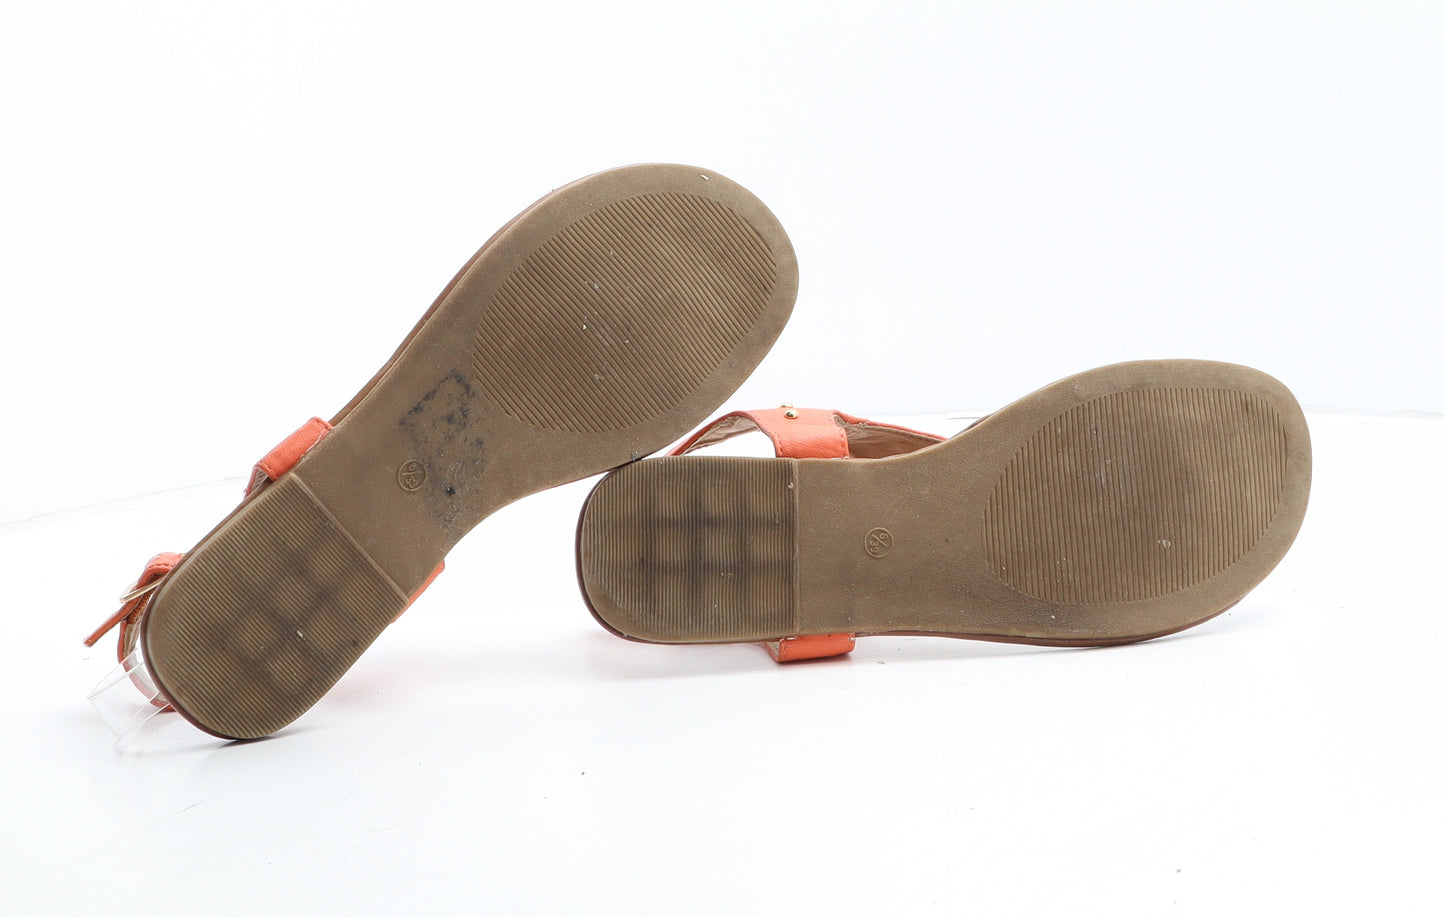 Fiore Womens Orange Synthetic Thong Sandal UK